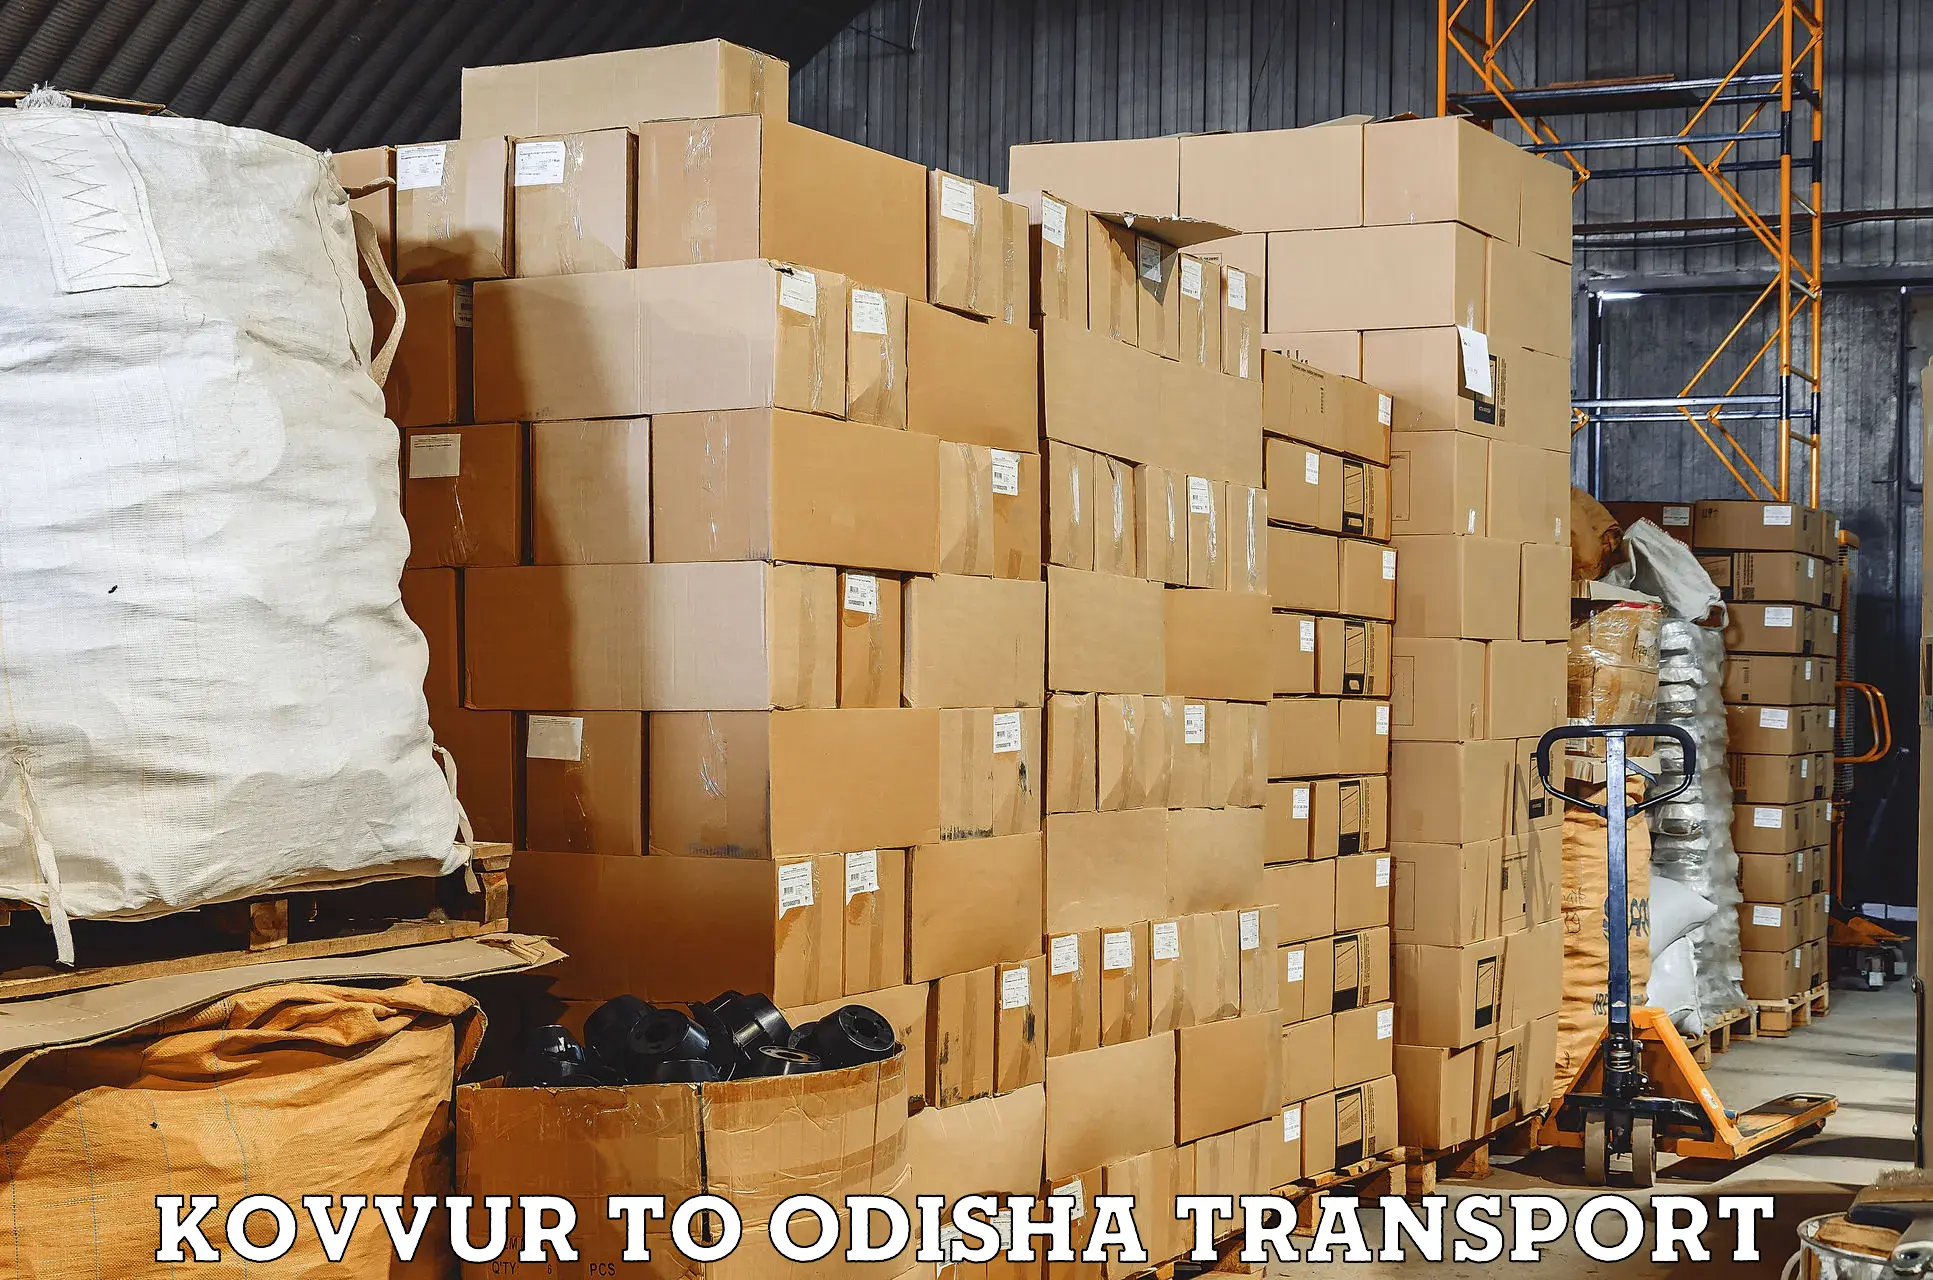 Transport shared services in Kovvur to Koraput